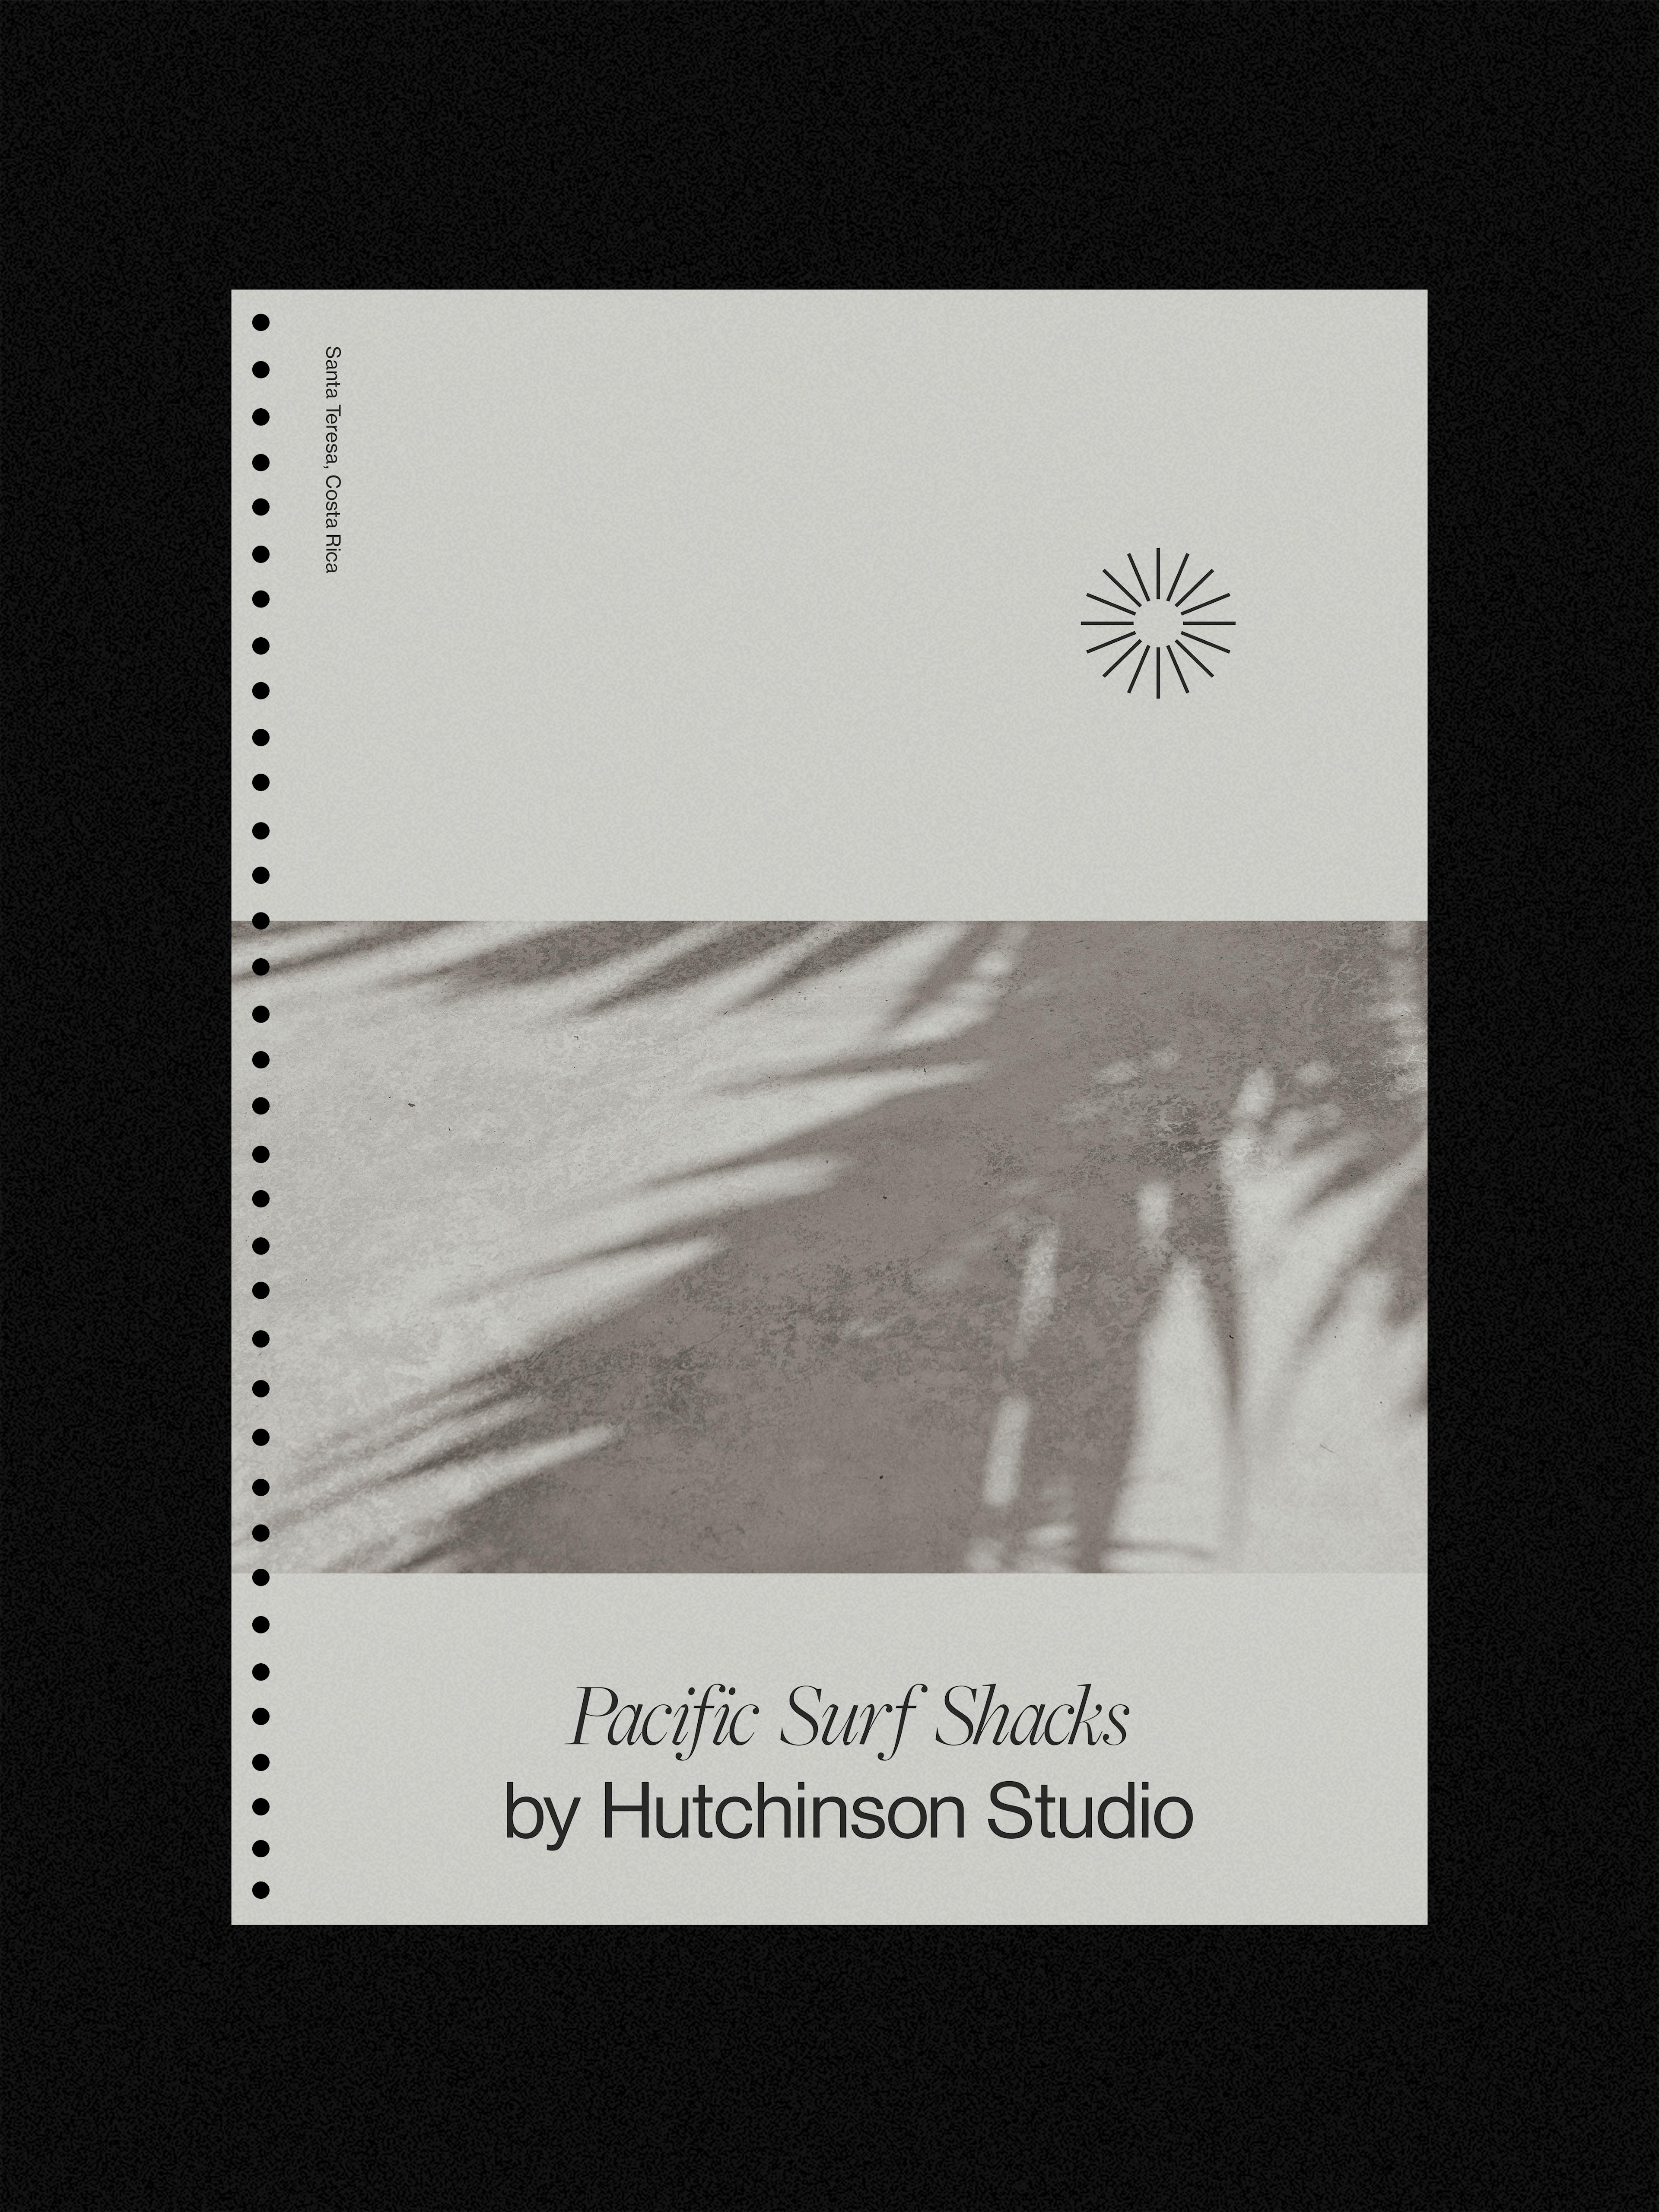 upcomingstudio-pacific-surf-shacks-cover.jpg